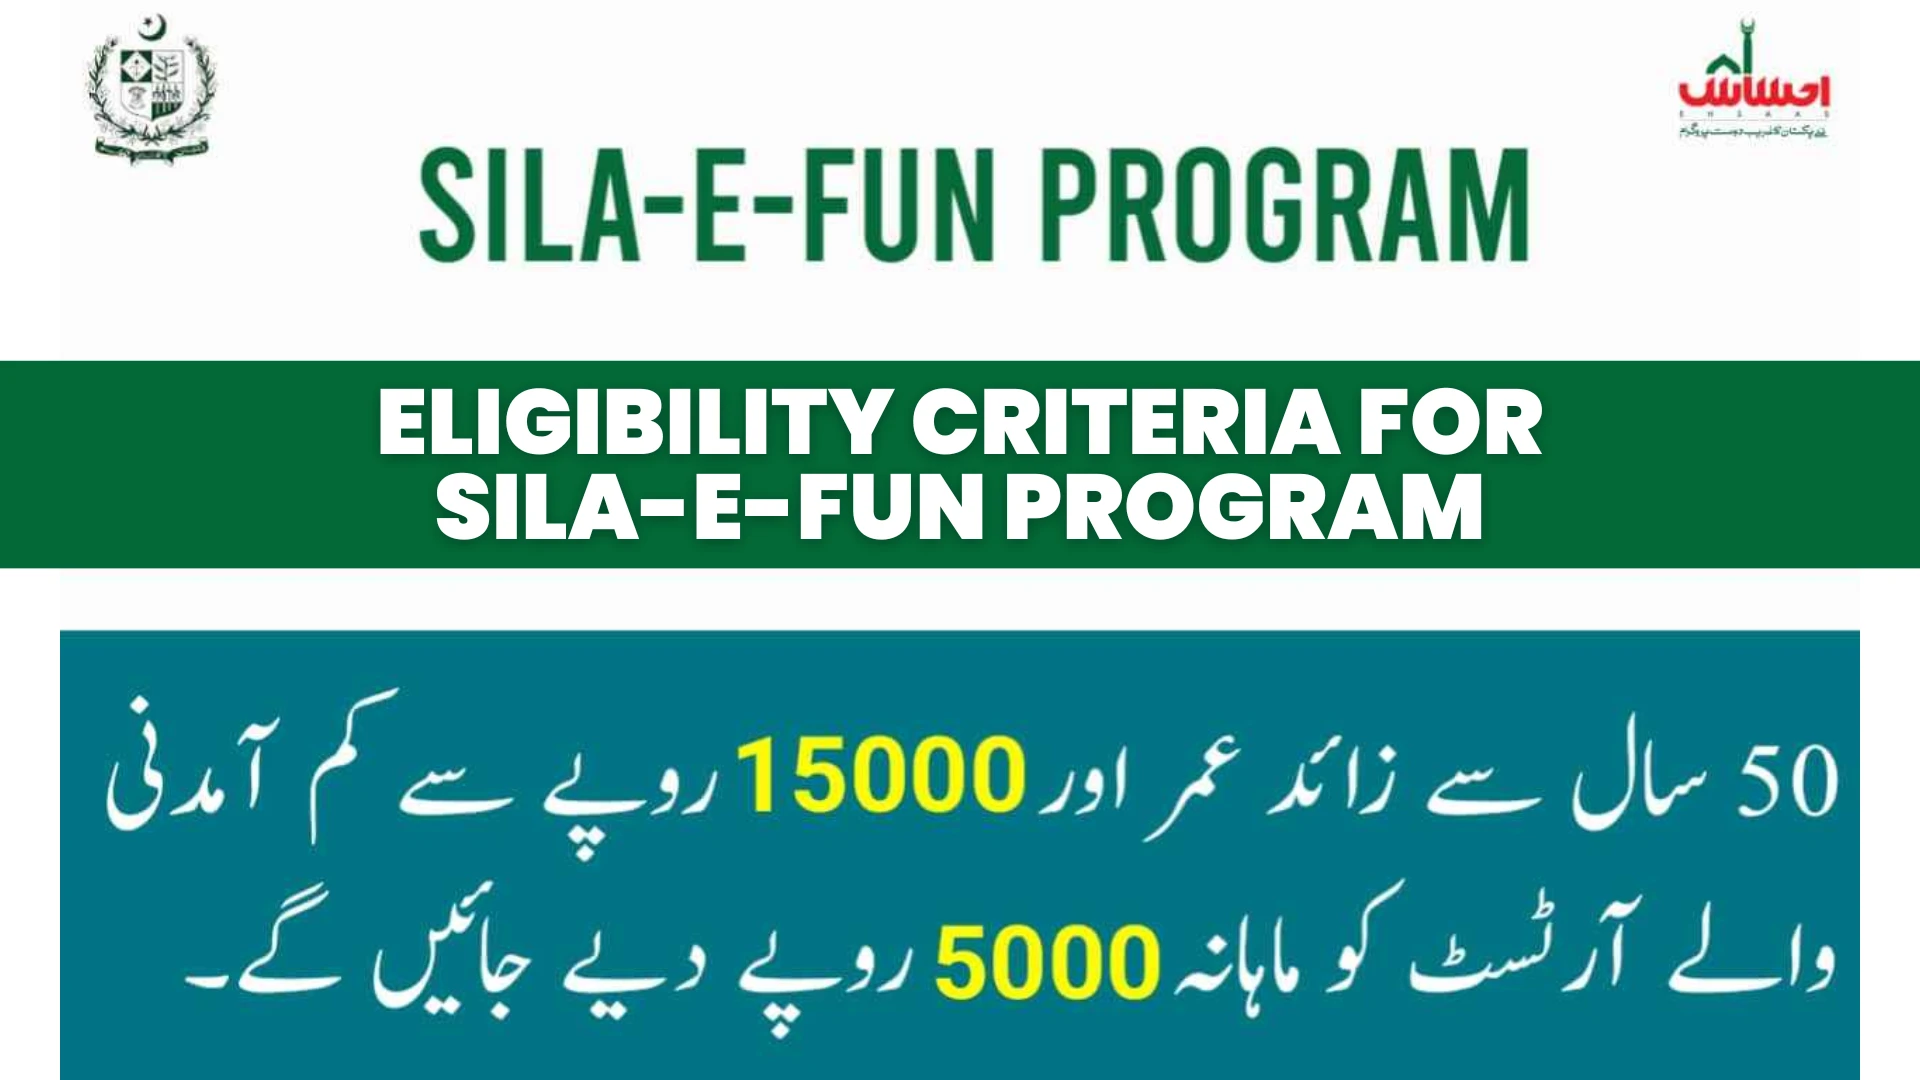 Eligibility Criteria for Sila-e-Fun Program